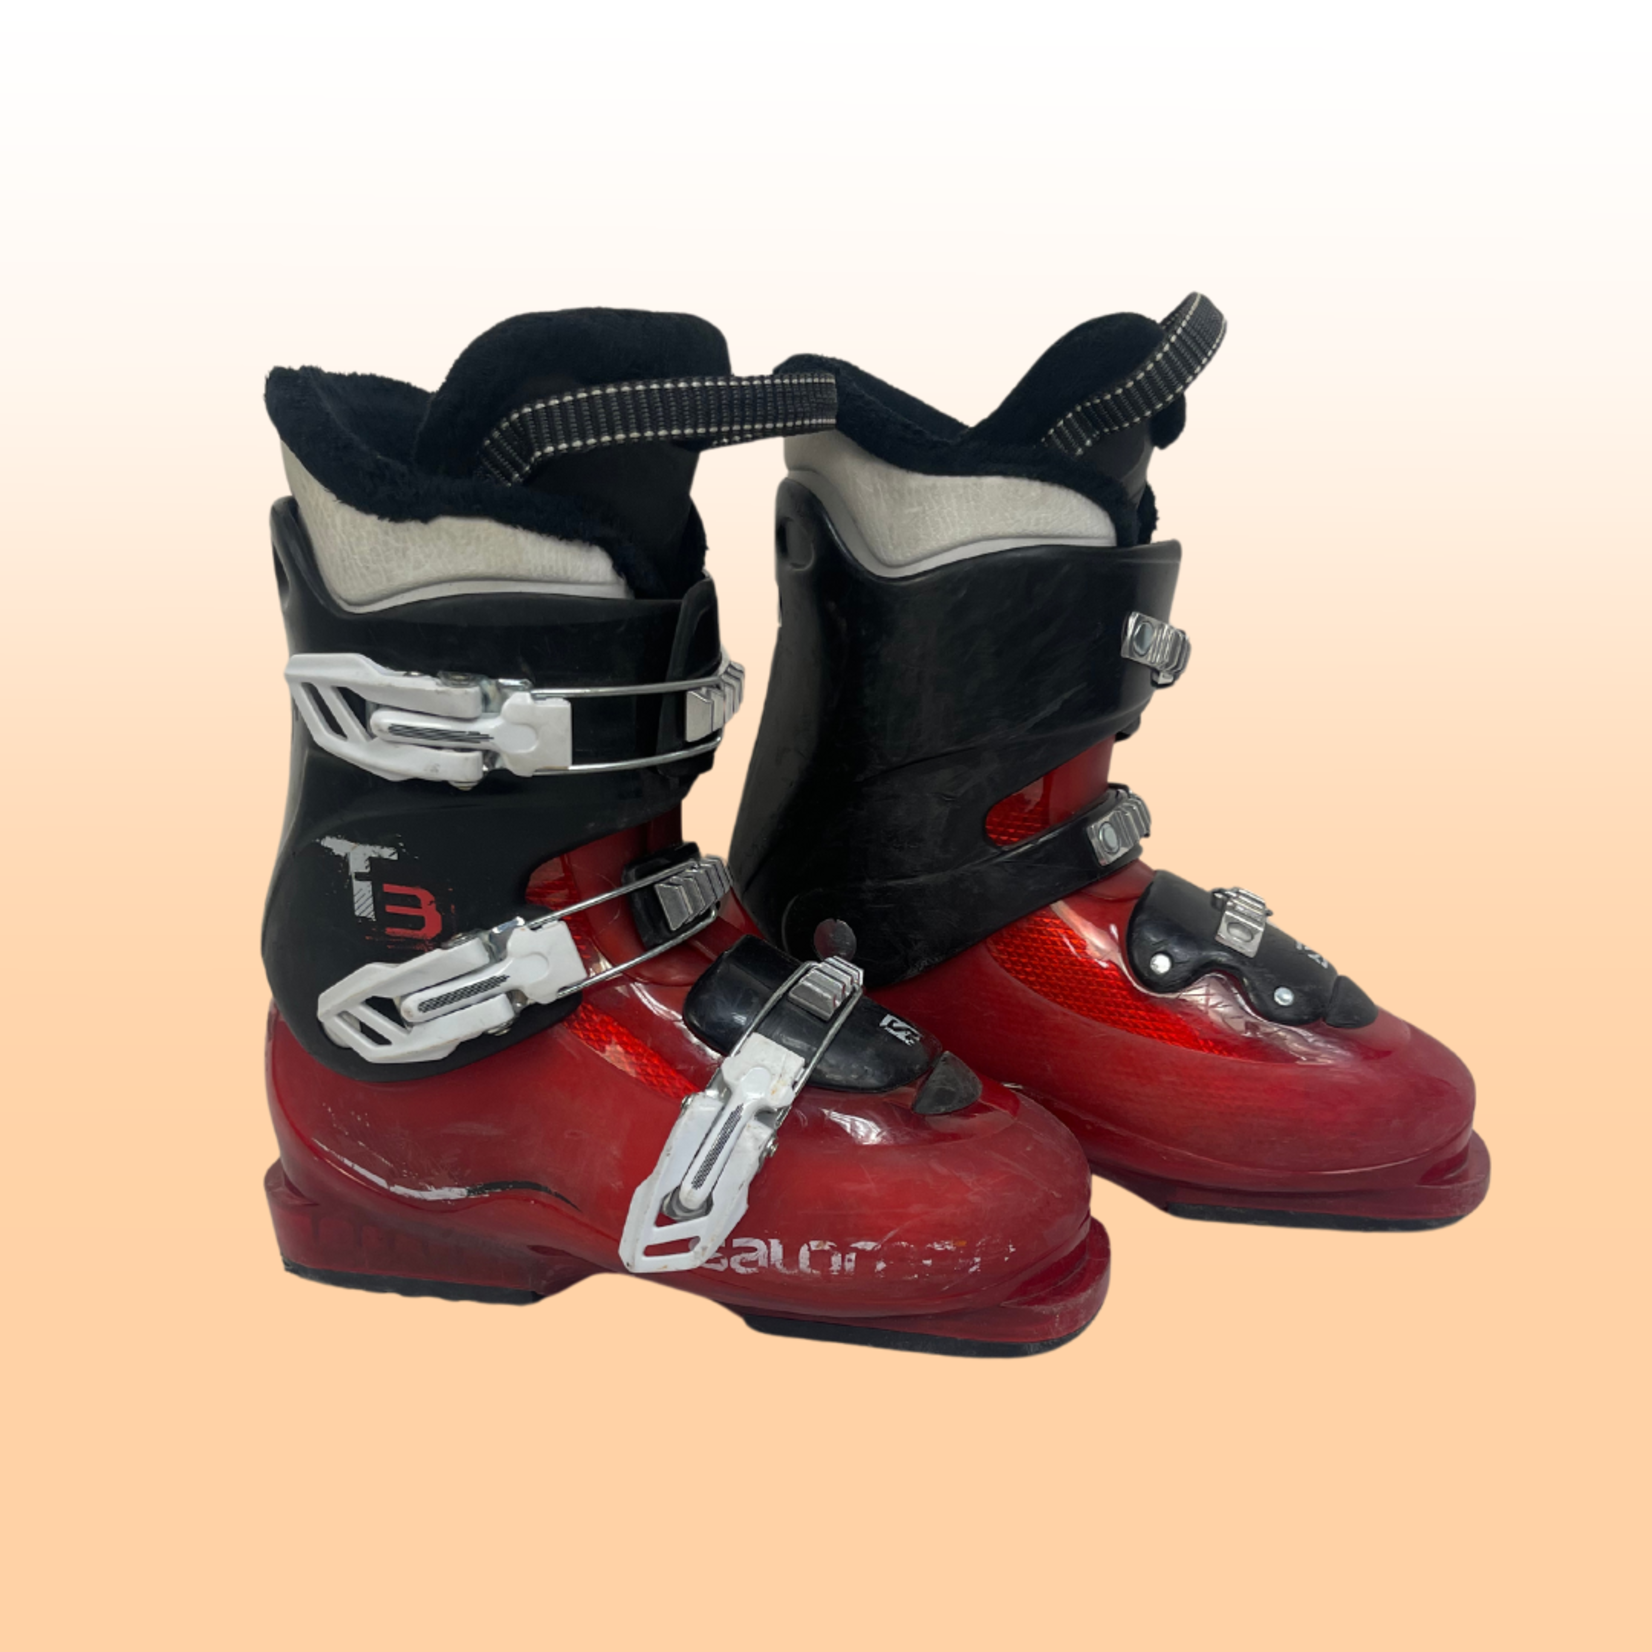 Salomon Salomon T3 Kids Ski Boots, Size 25.5